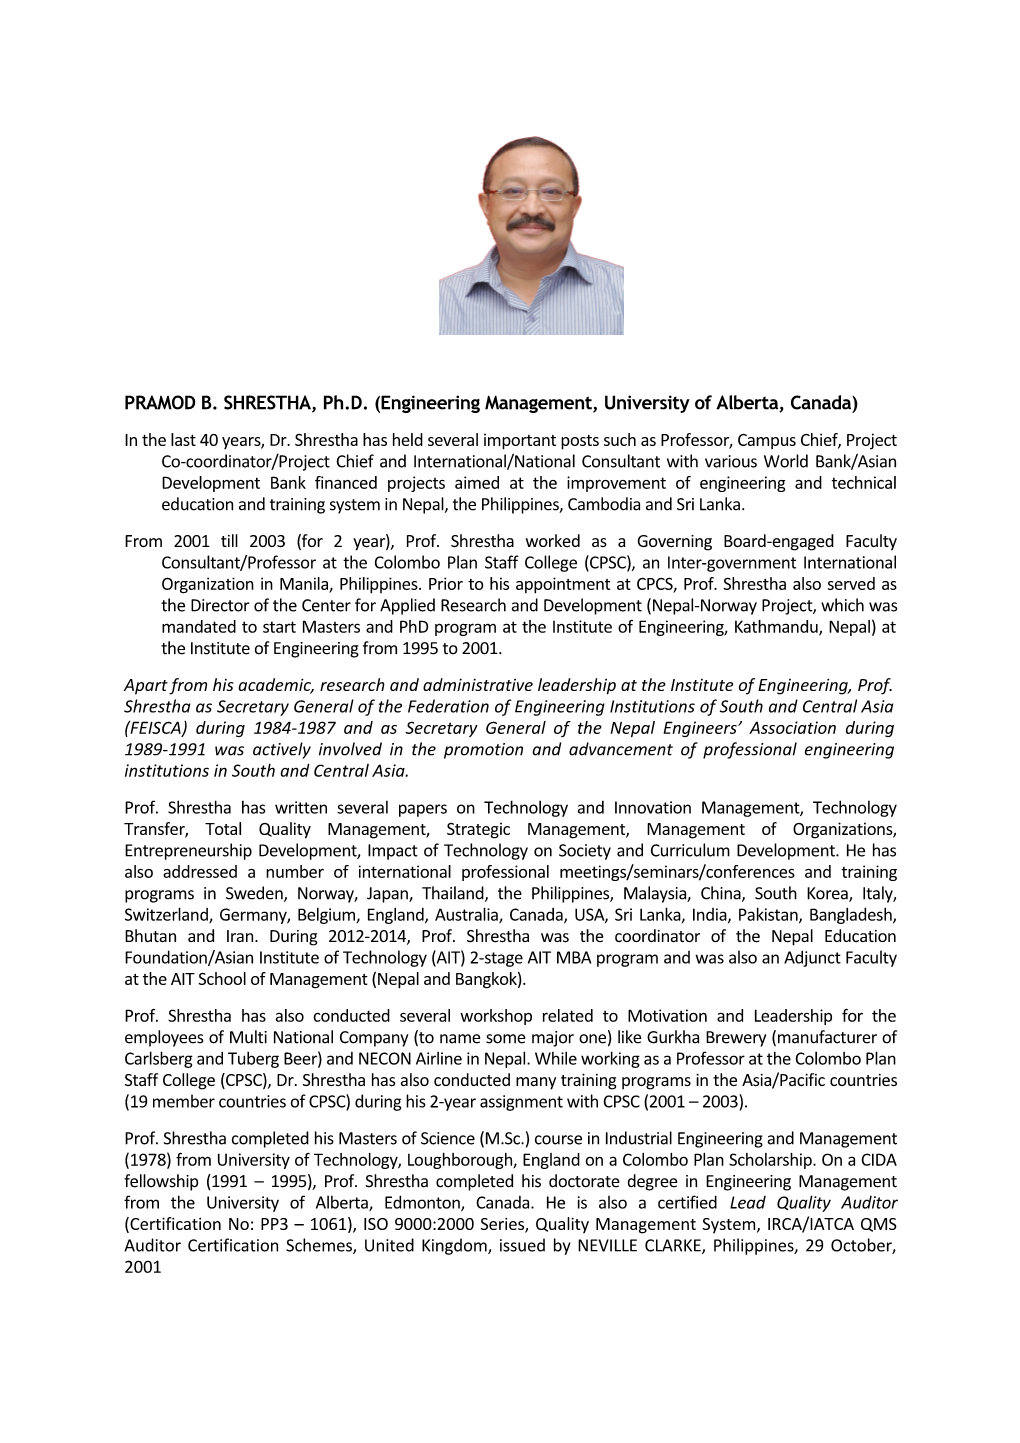 PRAMOD B. SHRESTHA, Ph.D. (Engineering Management, University of Alberta, Canada)